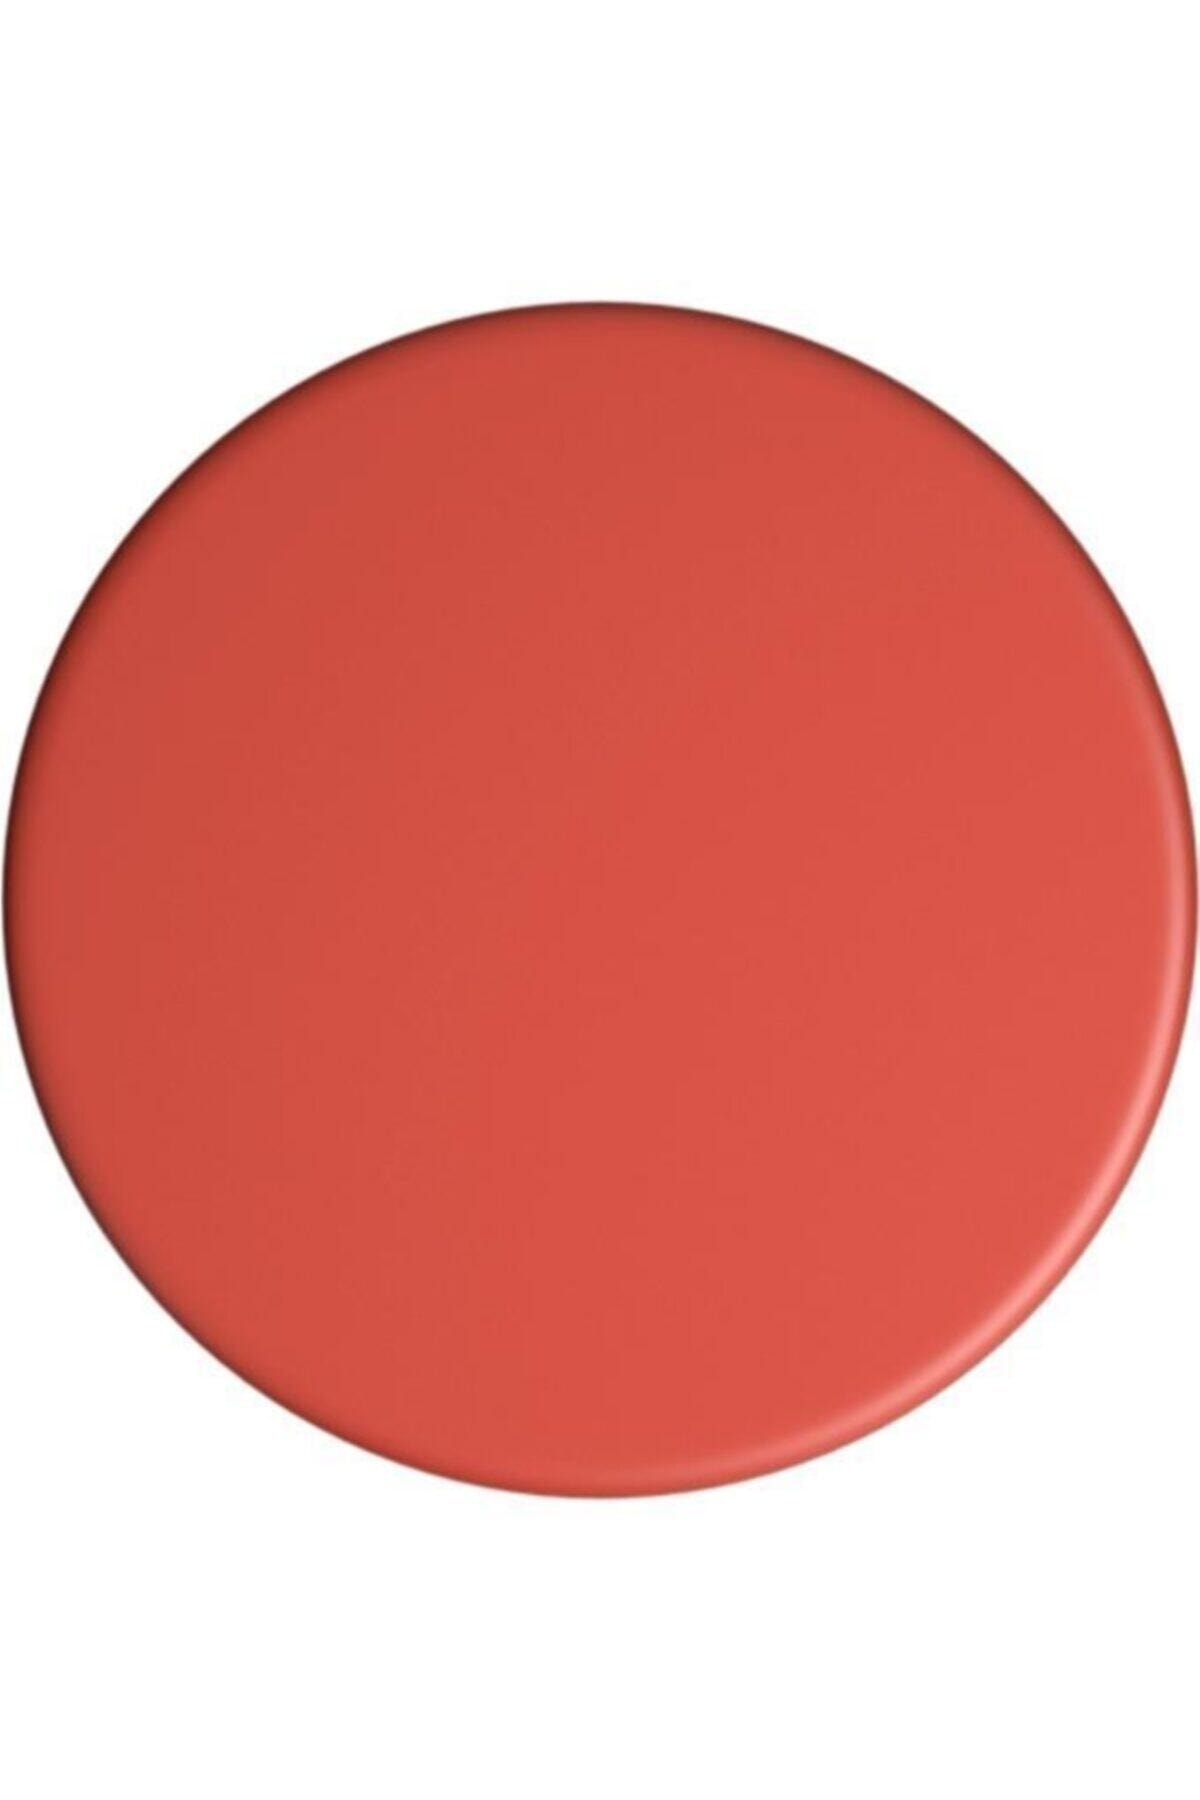 L'Oreal Paris رژ لب مات Color Sensational Ultimatte شماره 899 رنگ قرمز آجری